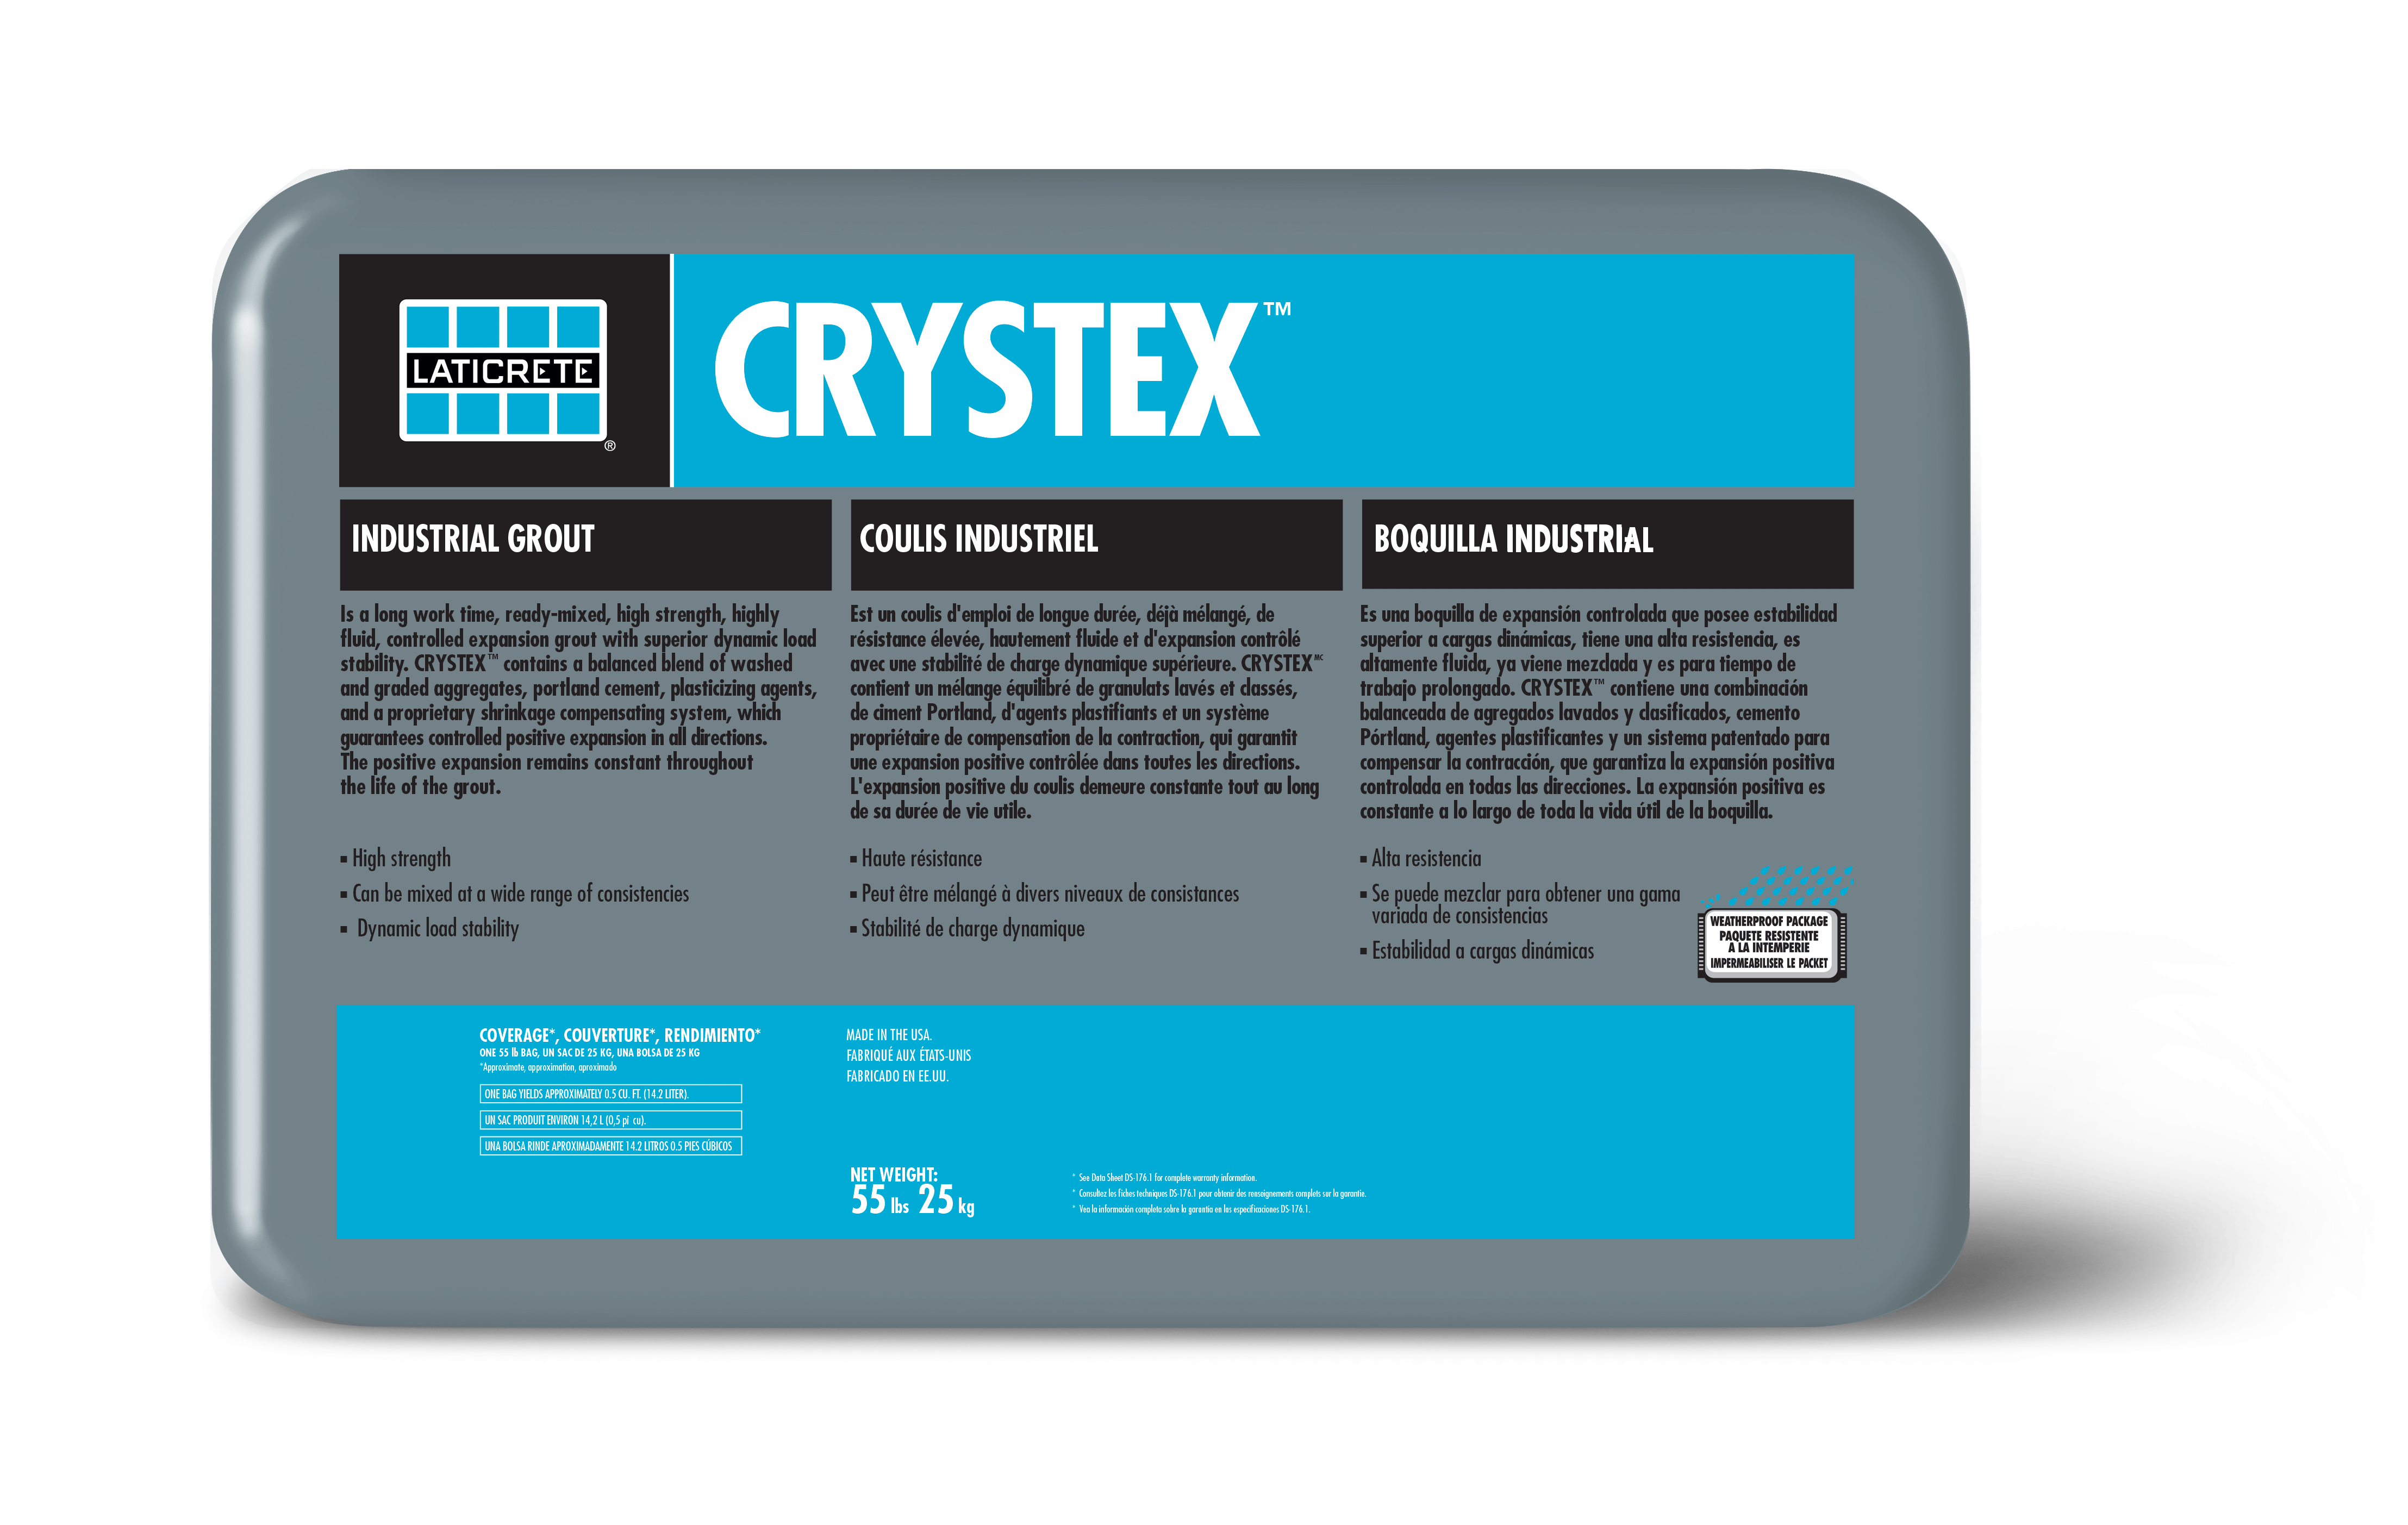 CRYSTEX™